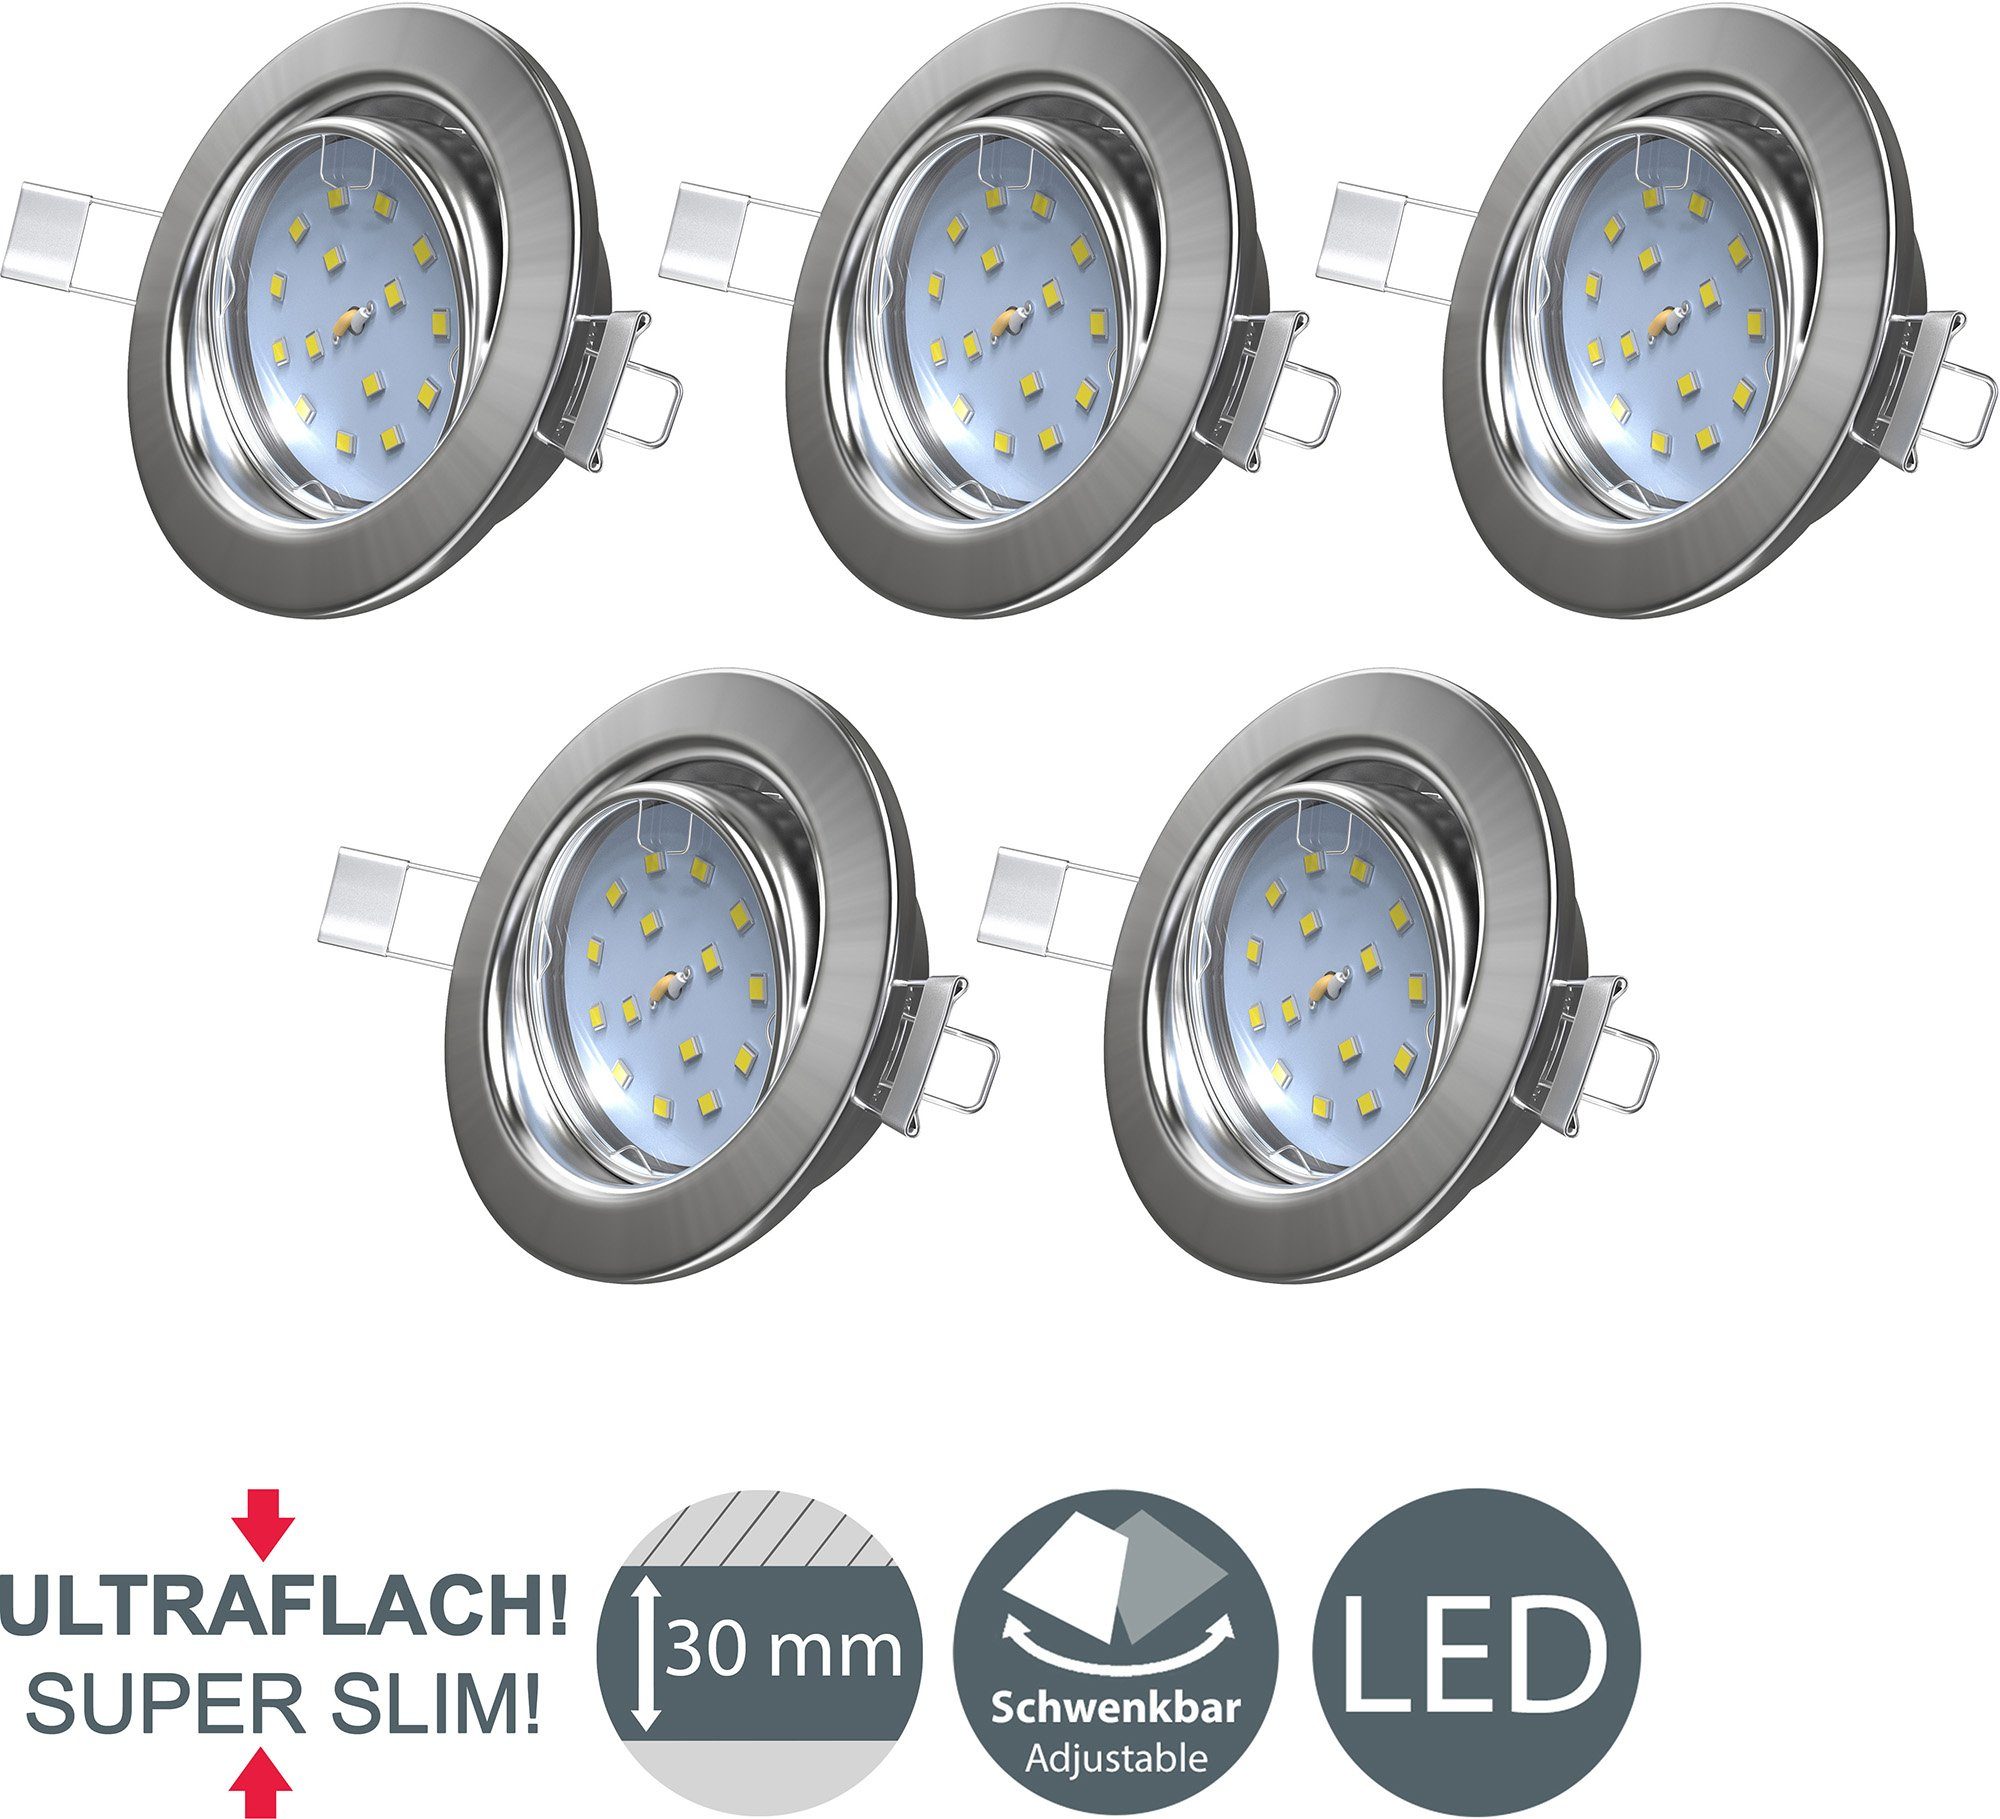 schwenkbar flach, B.K.Licht 400LM fest Einbauspots, LED LED 3000K, Einbauleuchte, 5W LED Warmweiß, inkl. integriert, ultra 5x